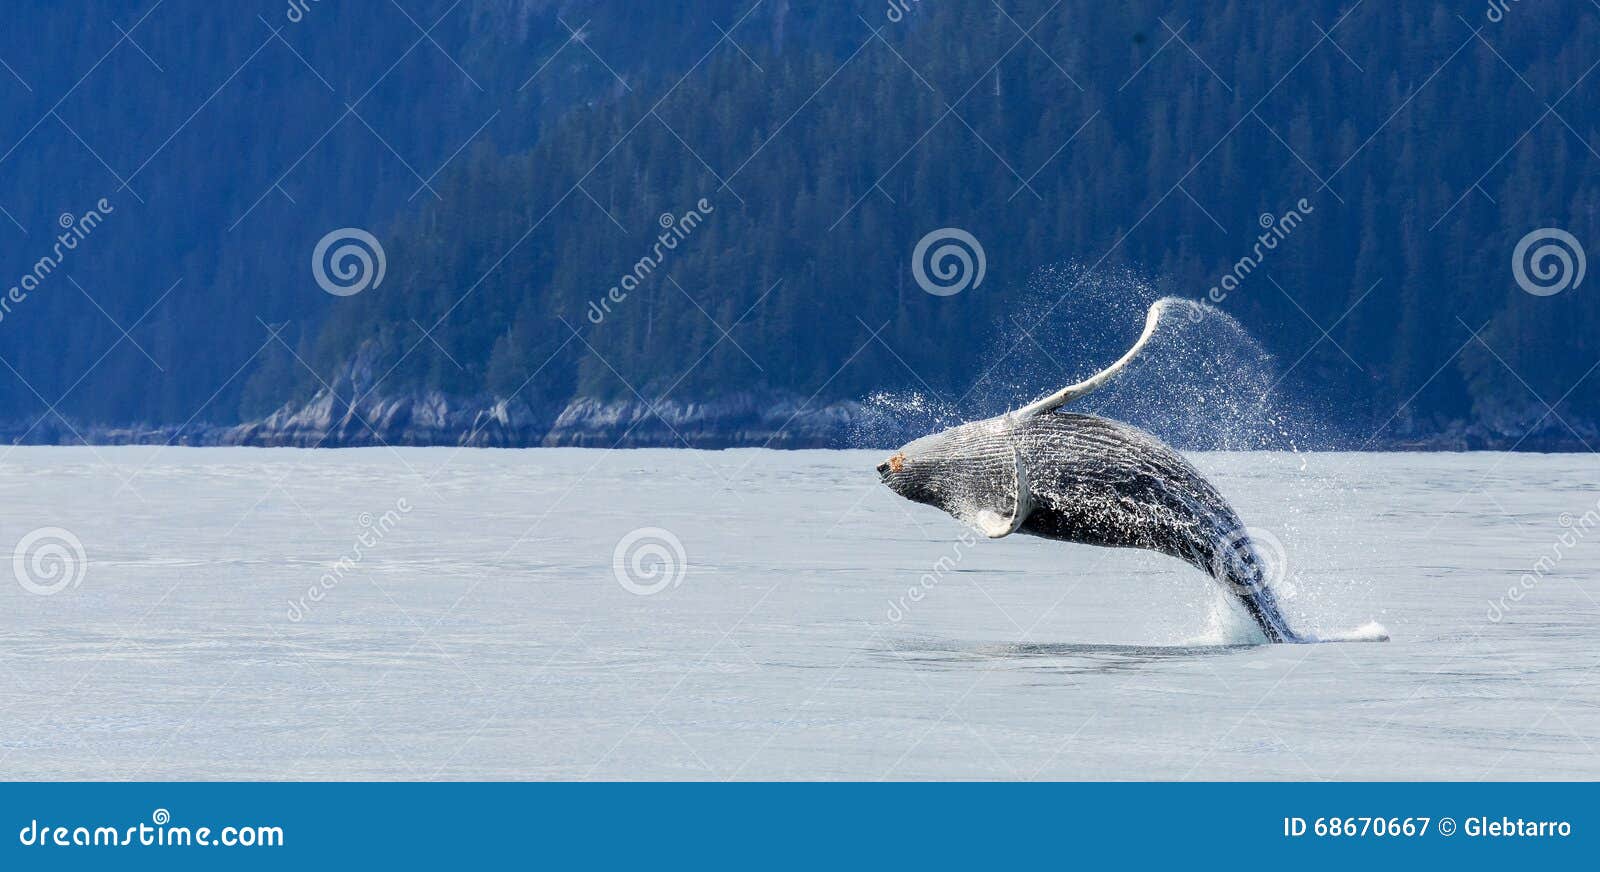 hampback whale breaching..